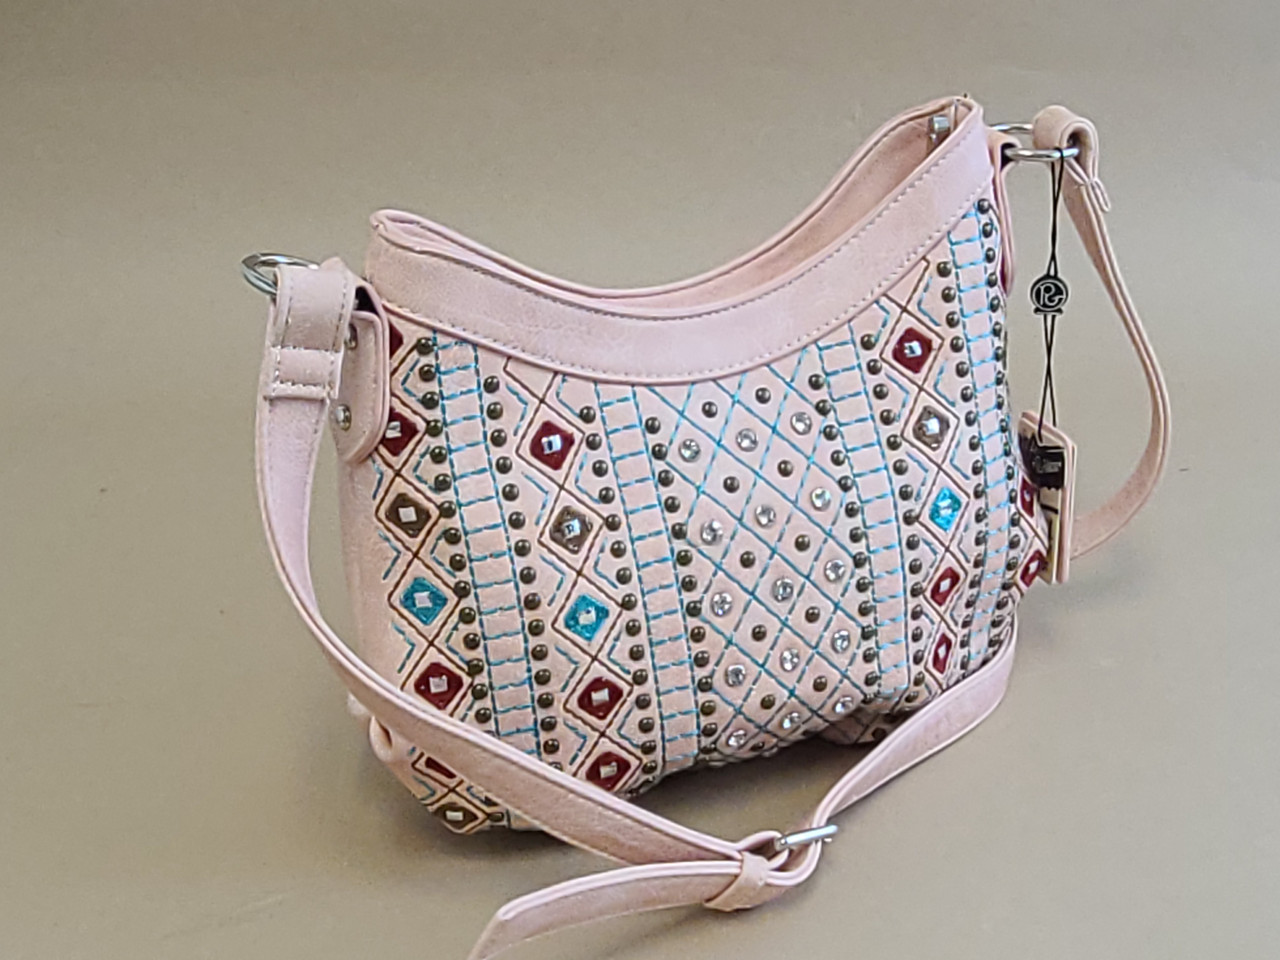 21 handbag essentials a woman should always carry